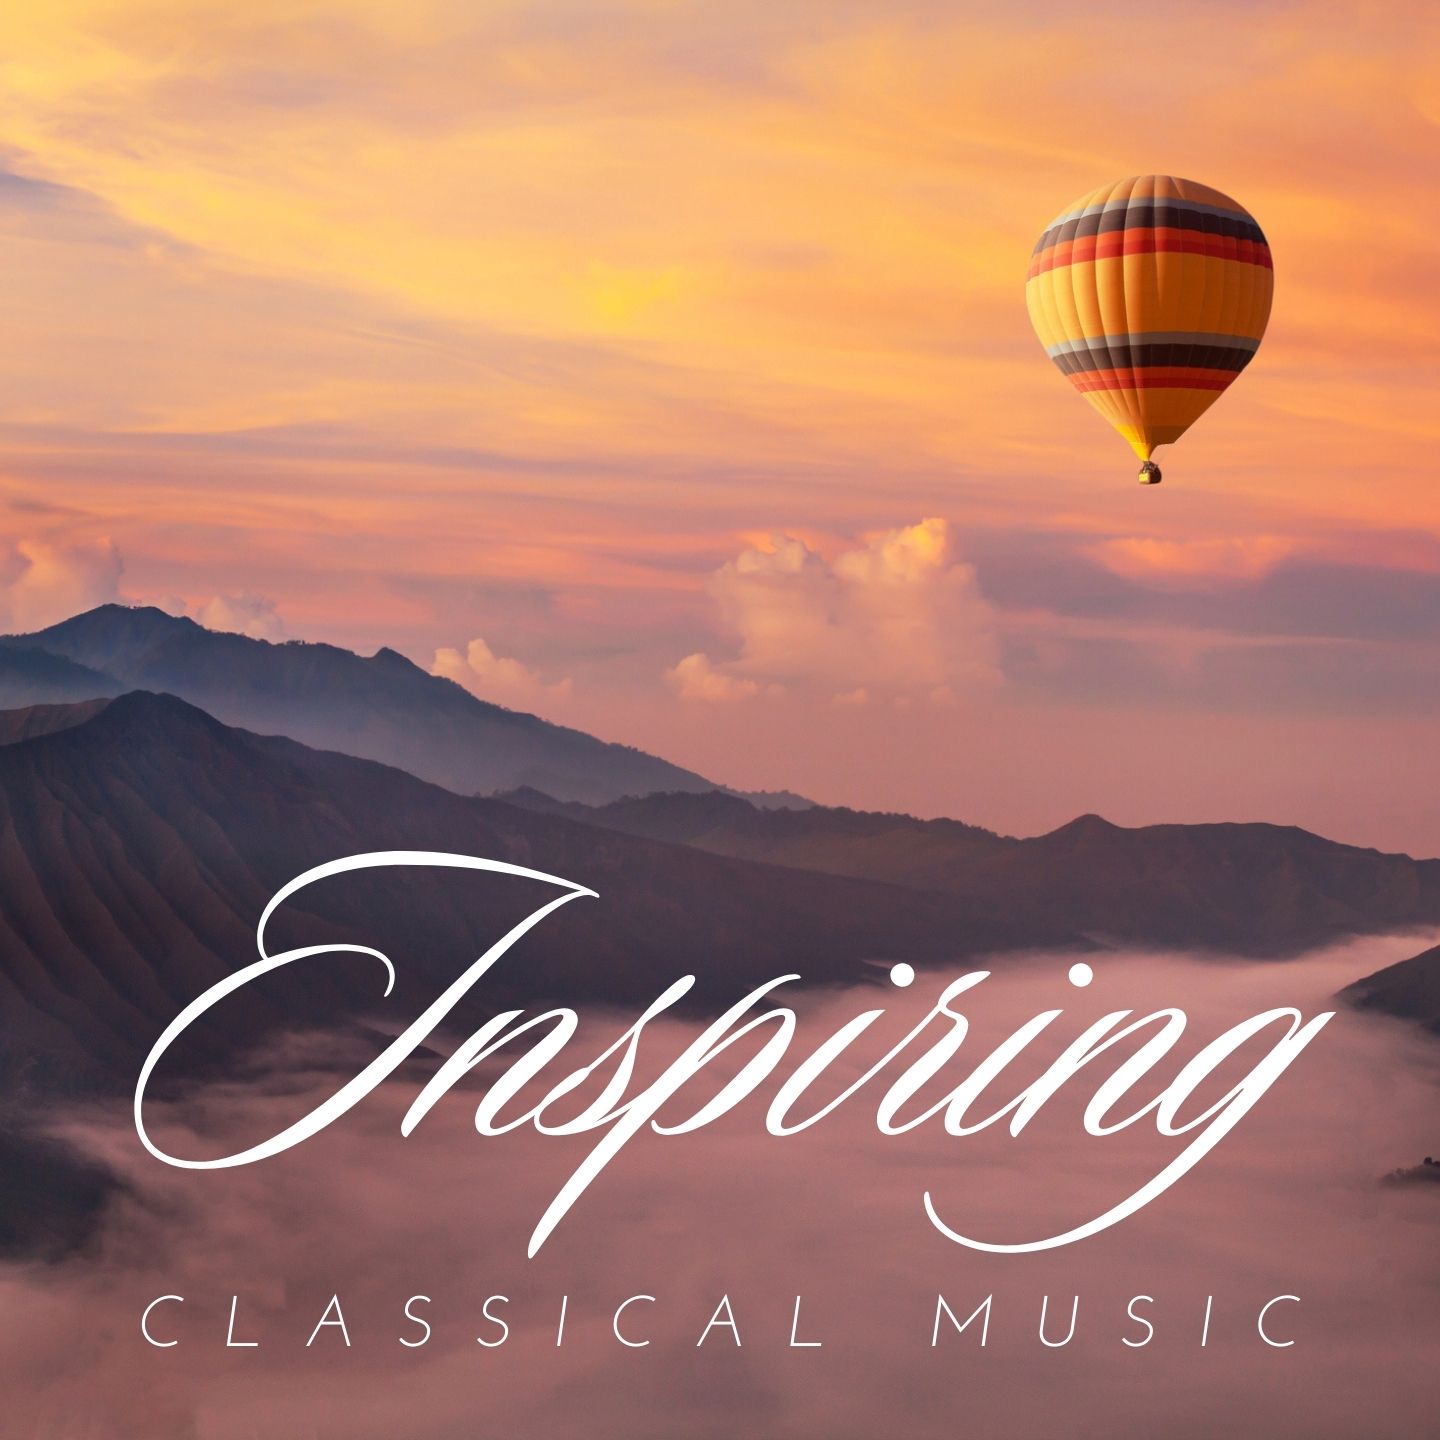 Inspiring Classical Music